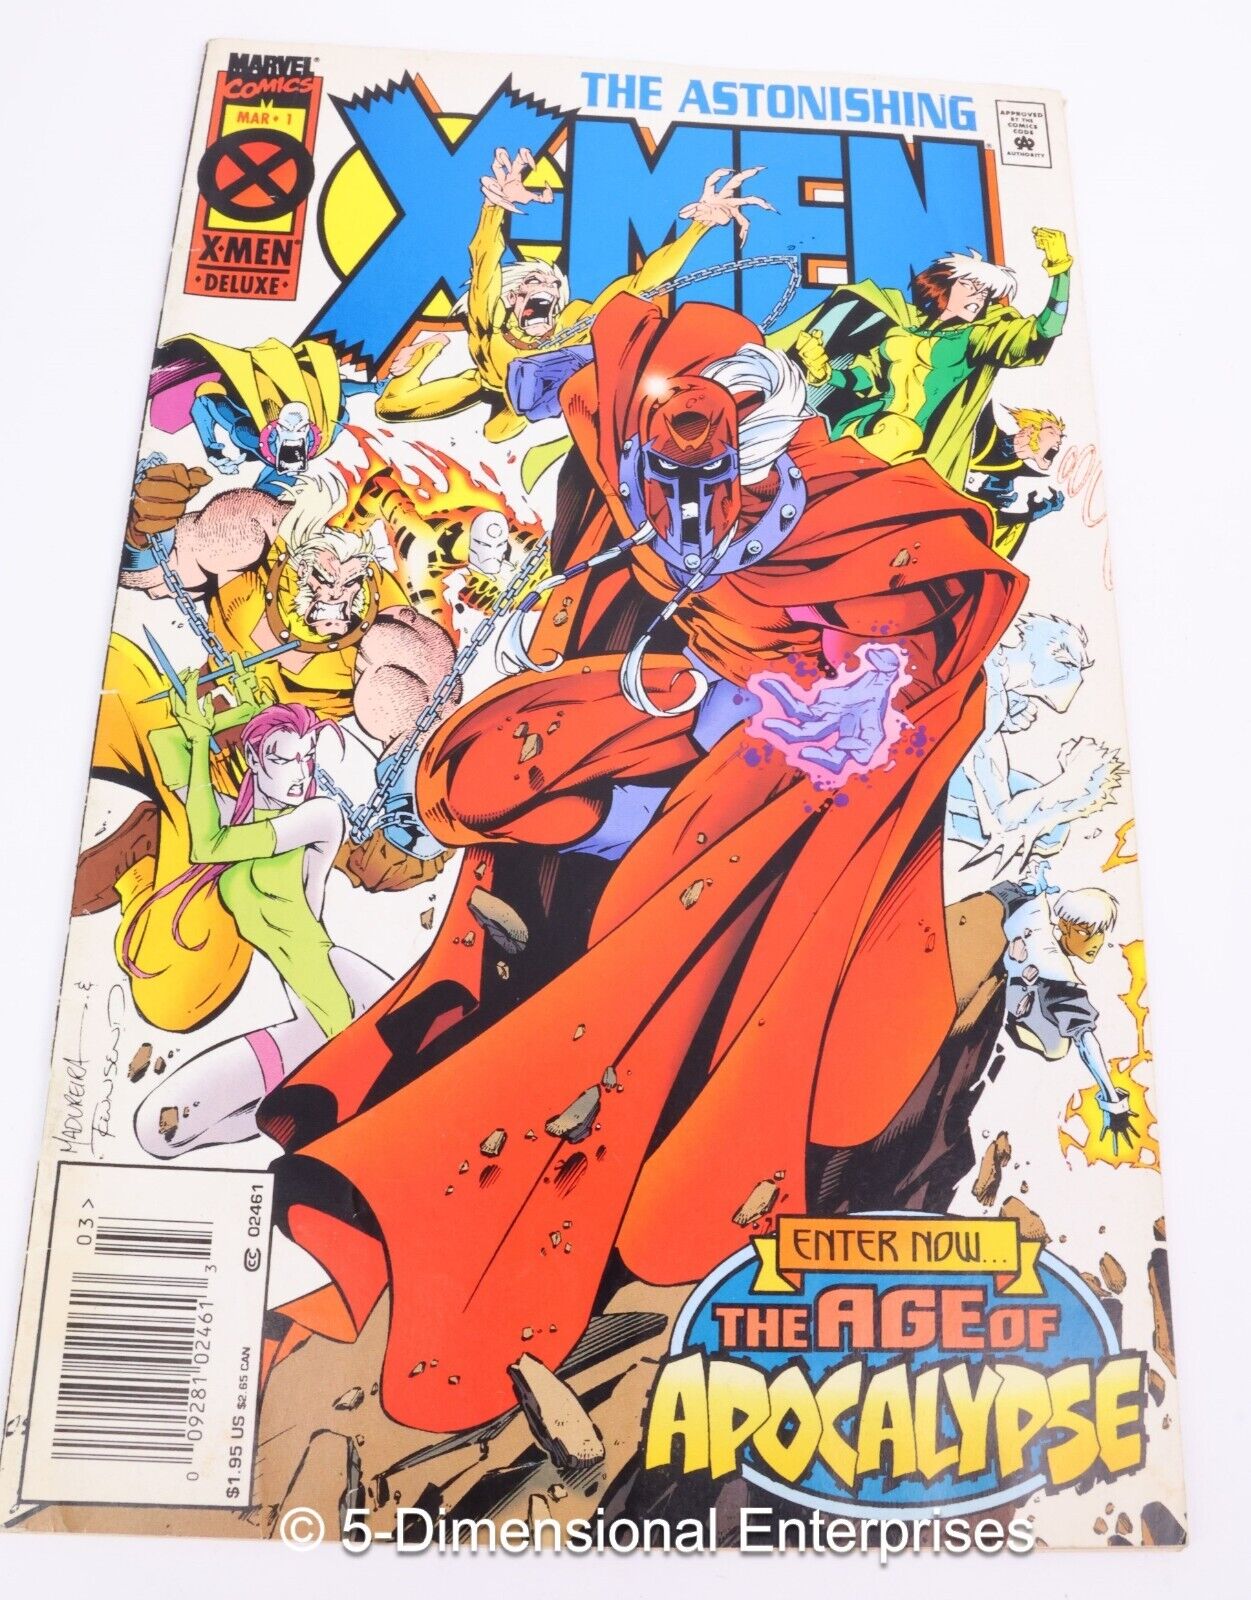 THE ASTONISHING X-MEN #1 (Mar 1995) Marvel Comics - Newsstand - Bagged Boarded